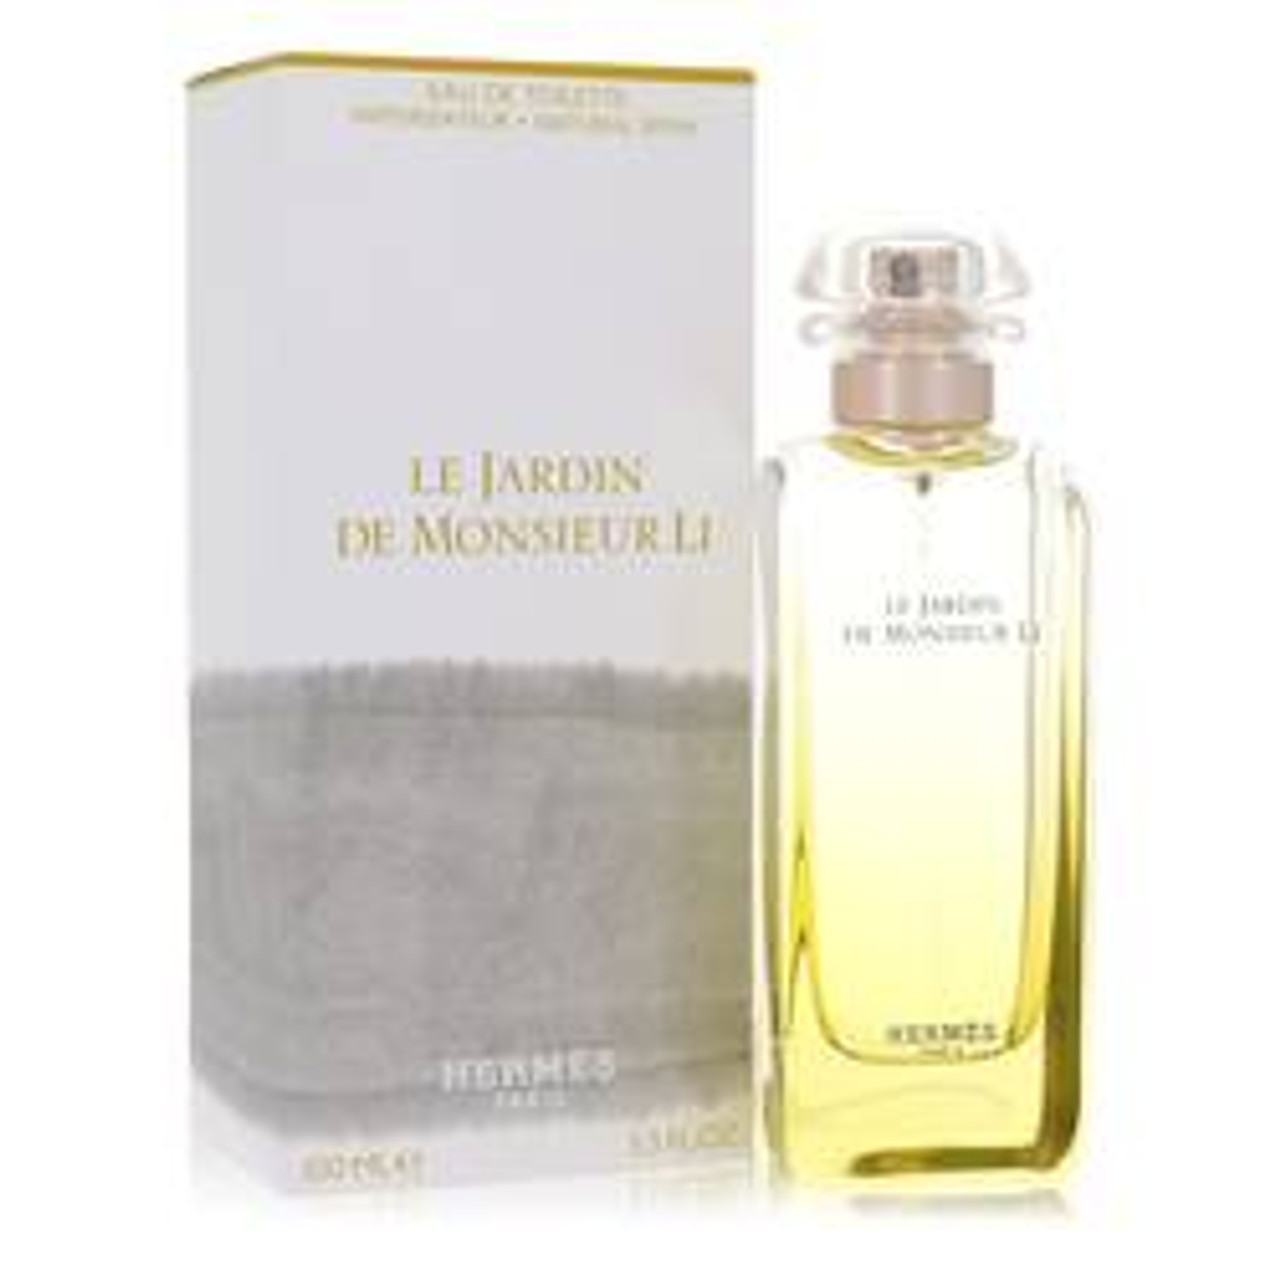 Le Jardin De Monsieur Li Perfume By Hermes Eau De Toilette Spray (unisex) 3.3 oz for Women - *Pre-Order